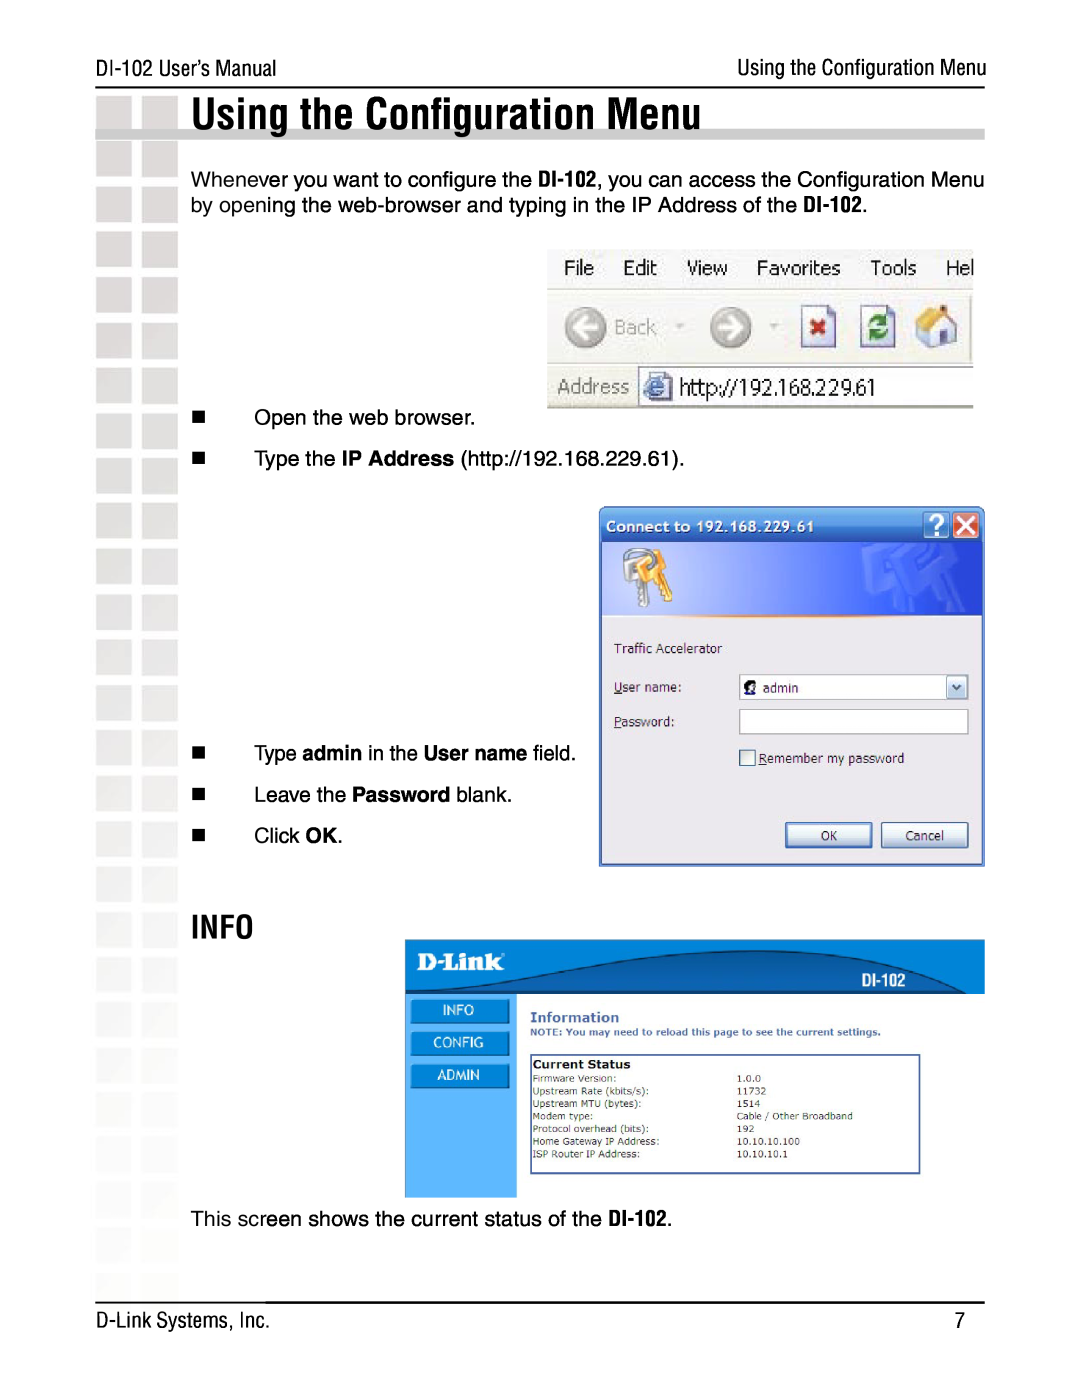 D-Link Internet/VoIP Accelerator, DI-102 manual Using the Conﬁguration Menu, Info 